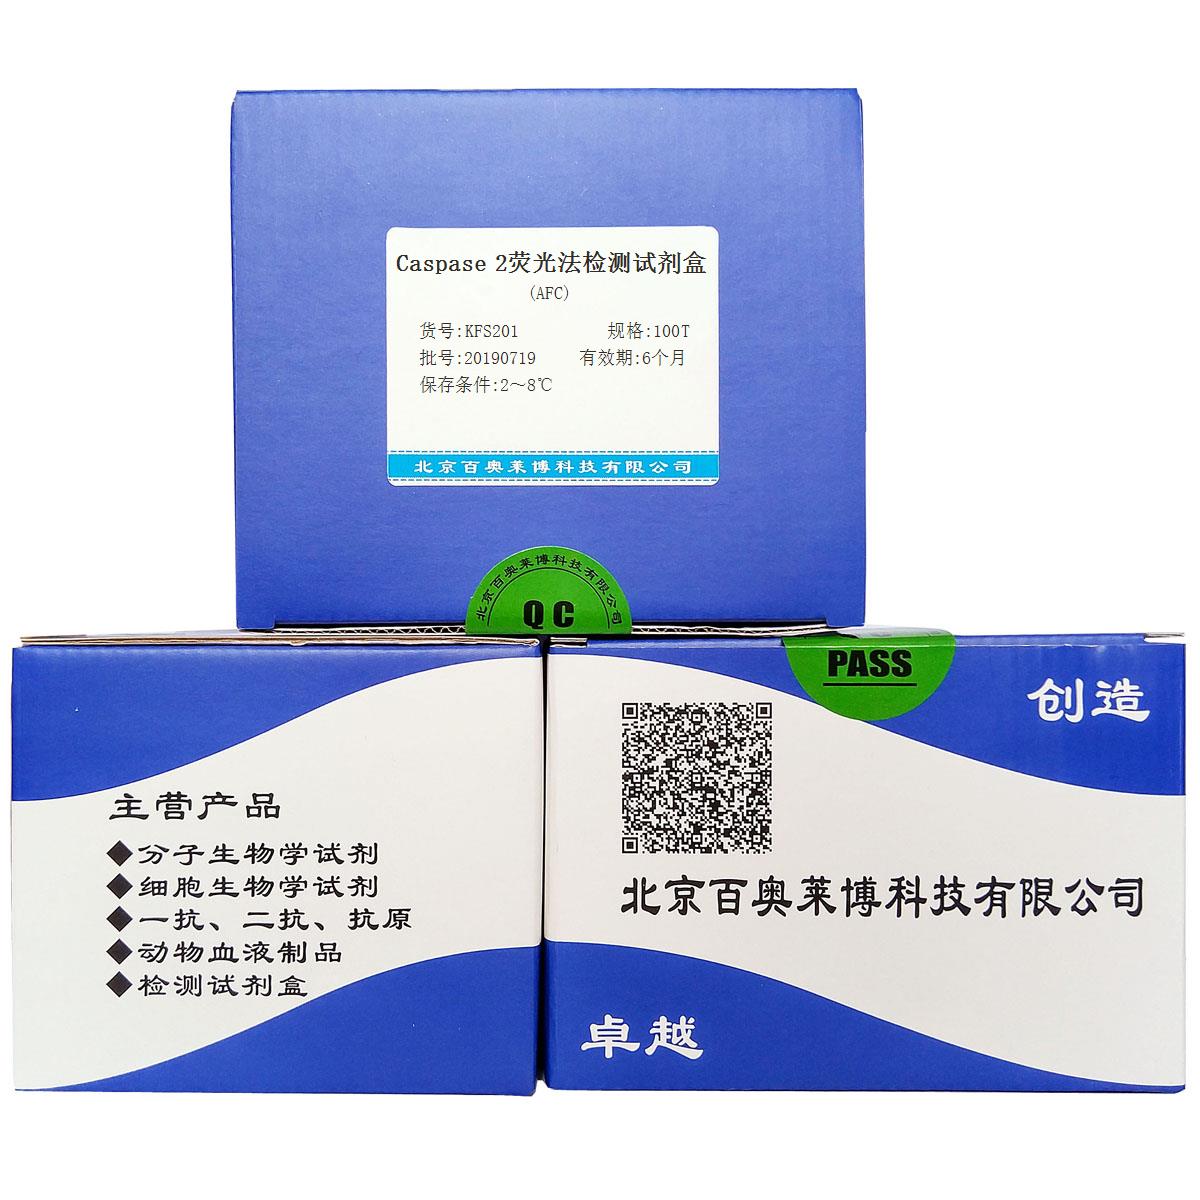 Caspase 2荧光法检测试剂盒(AFC)